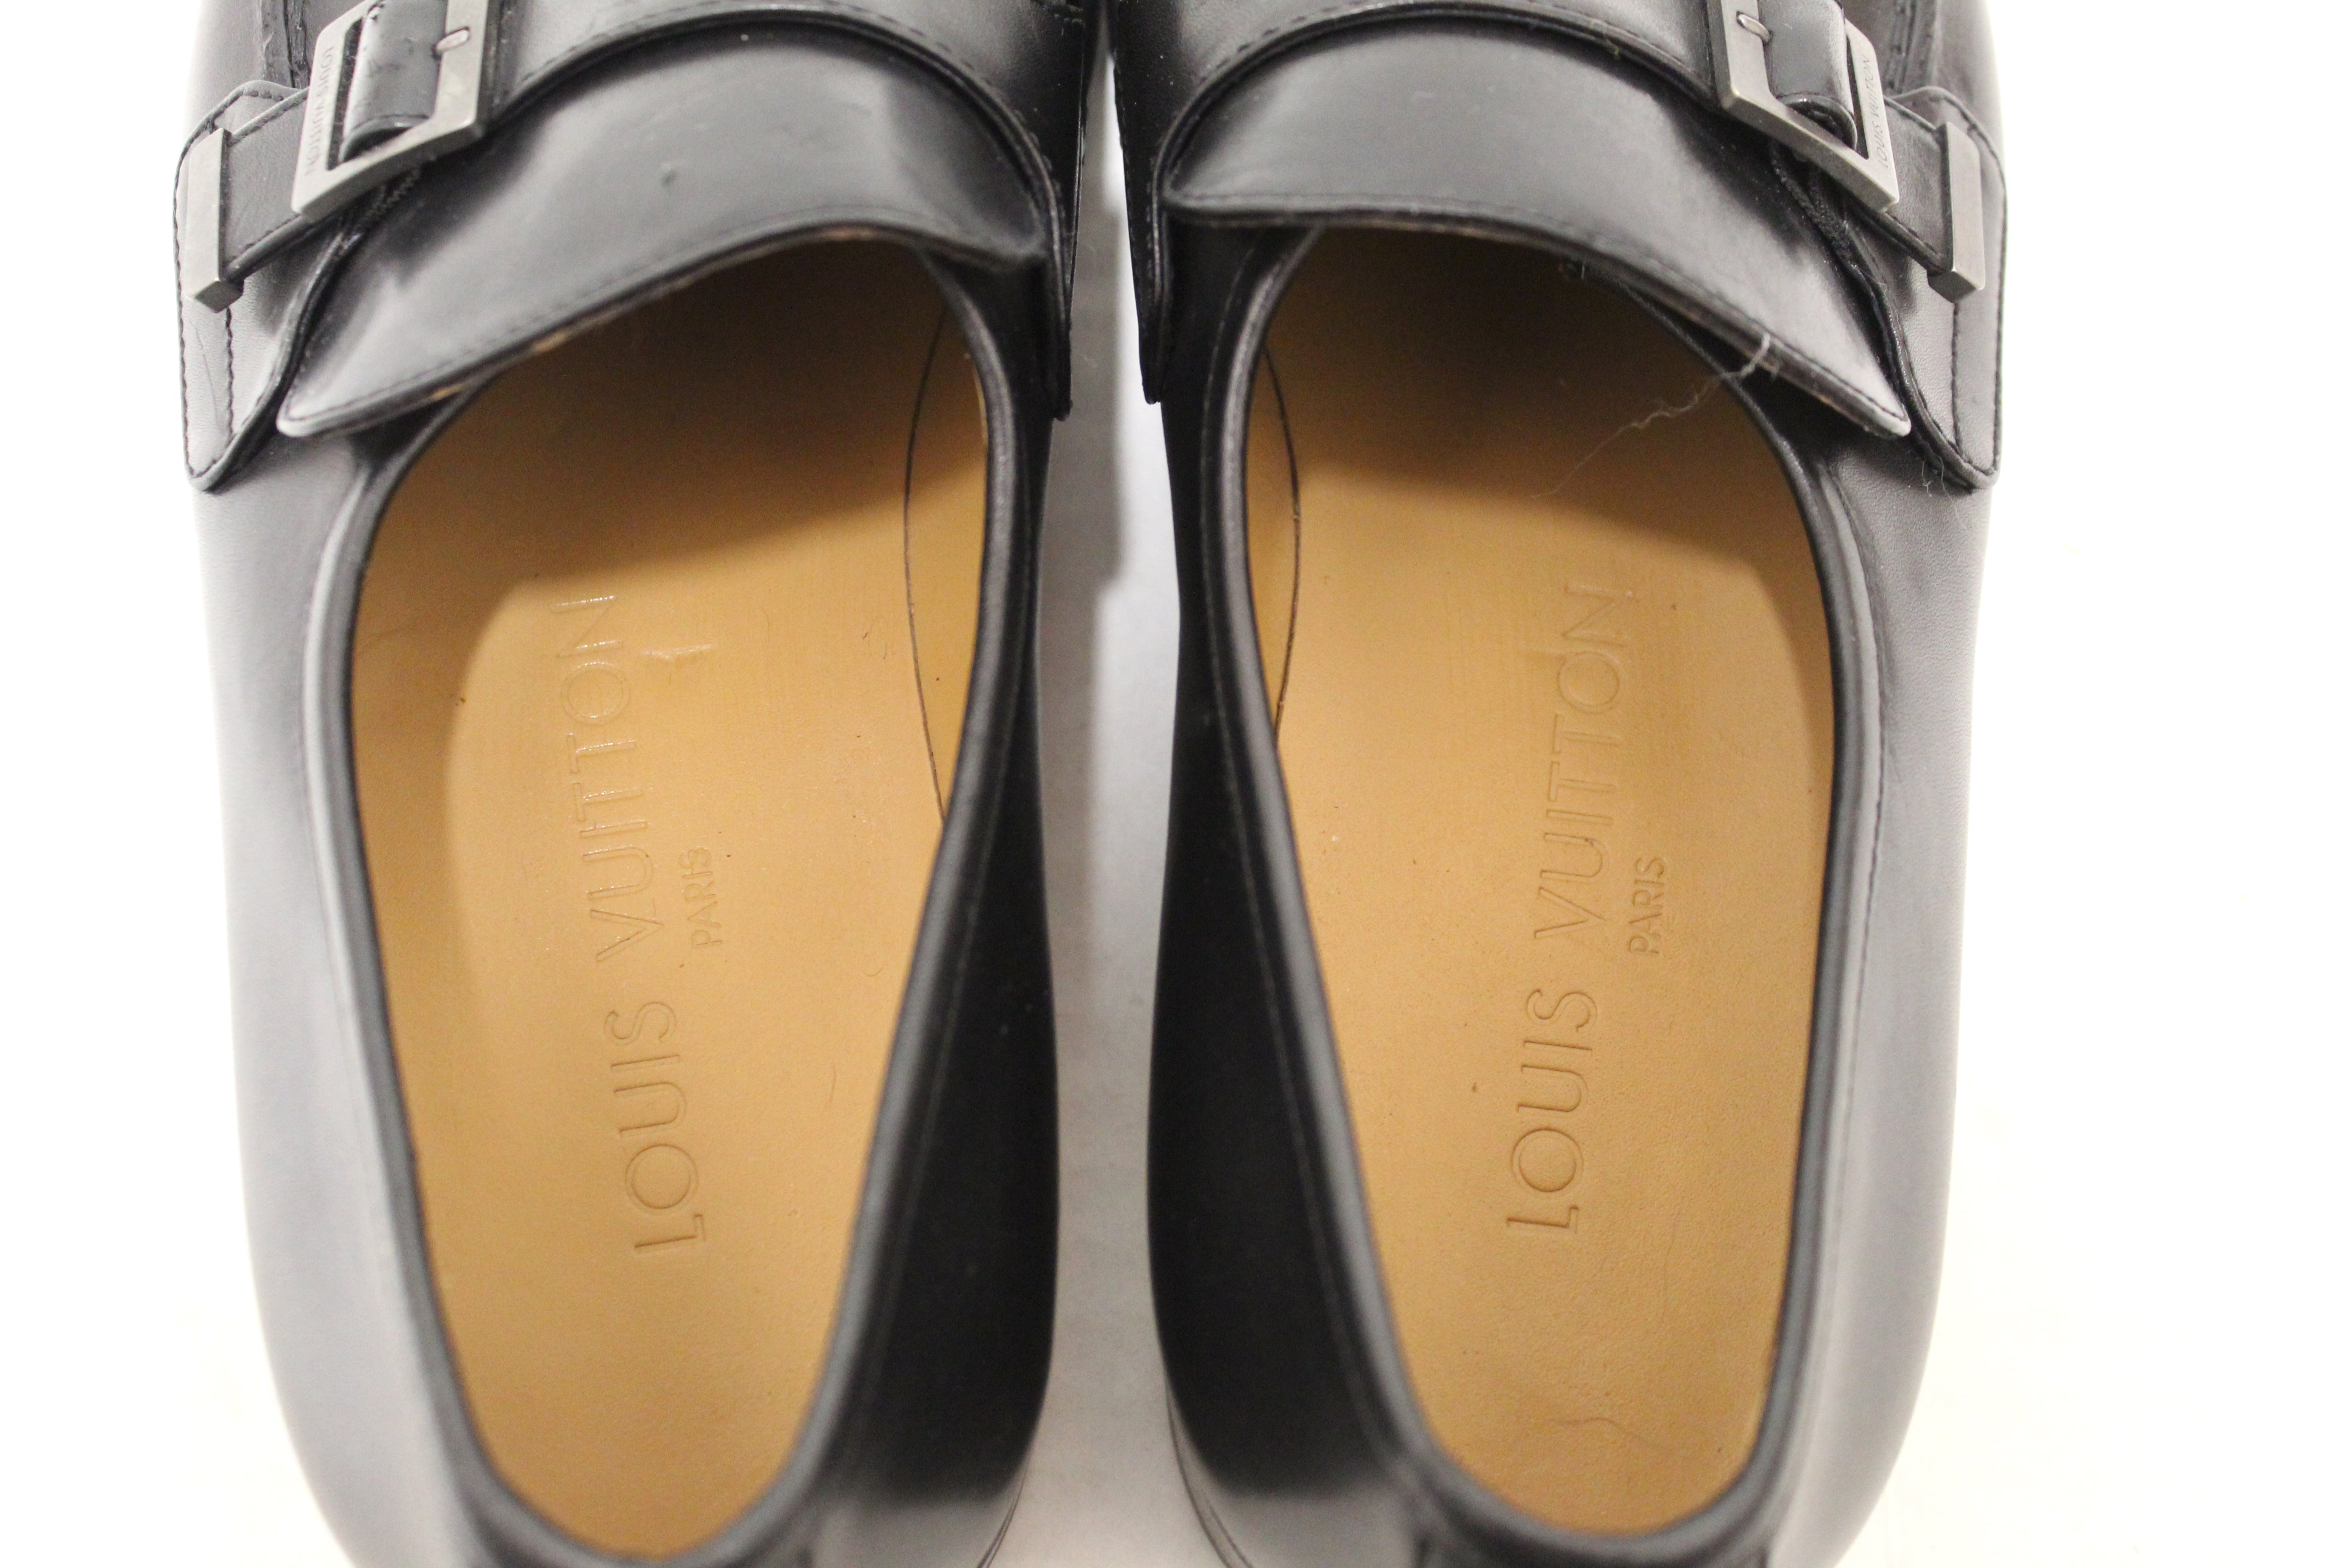 Authentic Louis Vuitton Men's Black Calf Leather Buckle Loafers Dress Shoes  UK size 6 (US size 7)